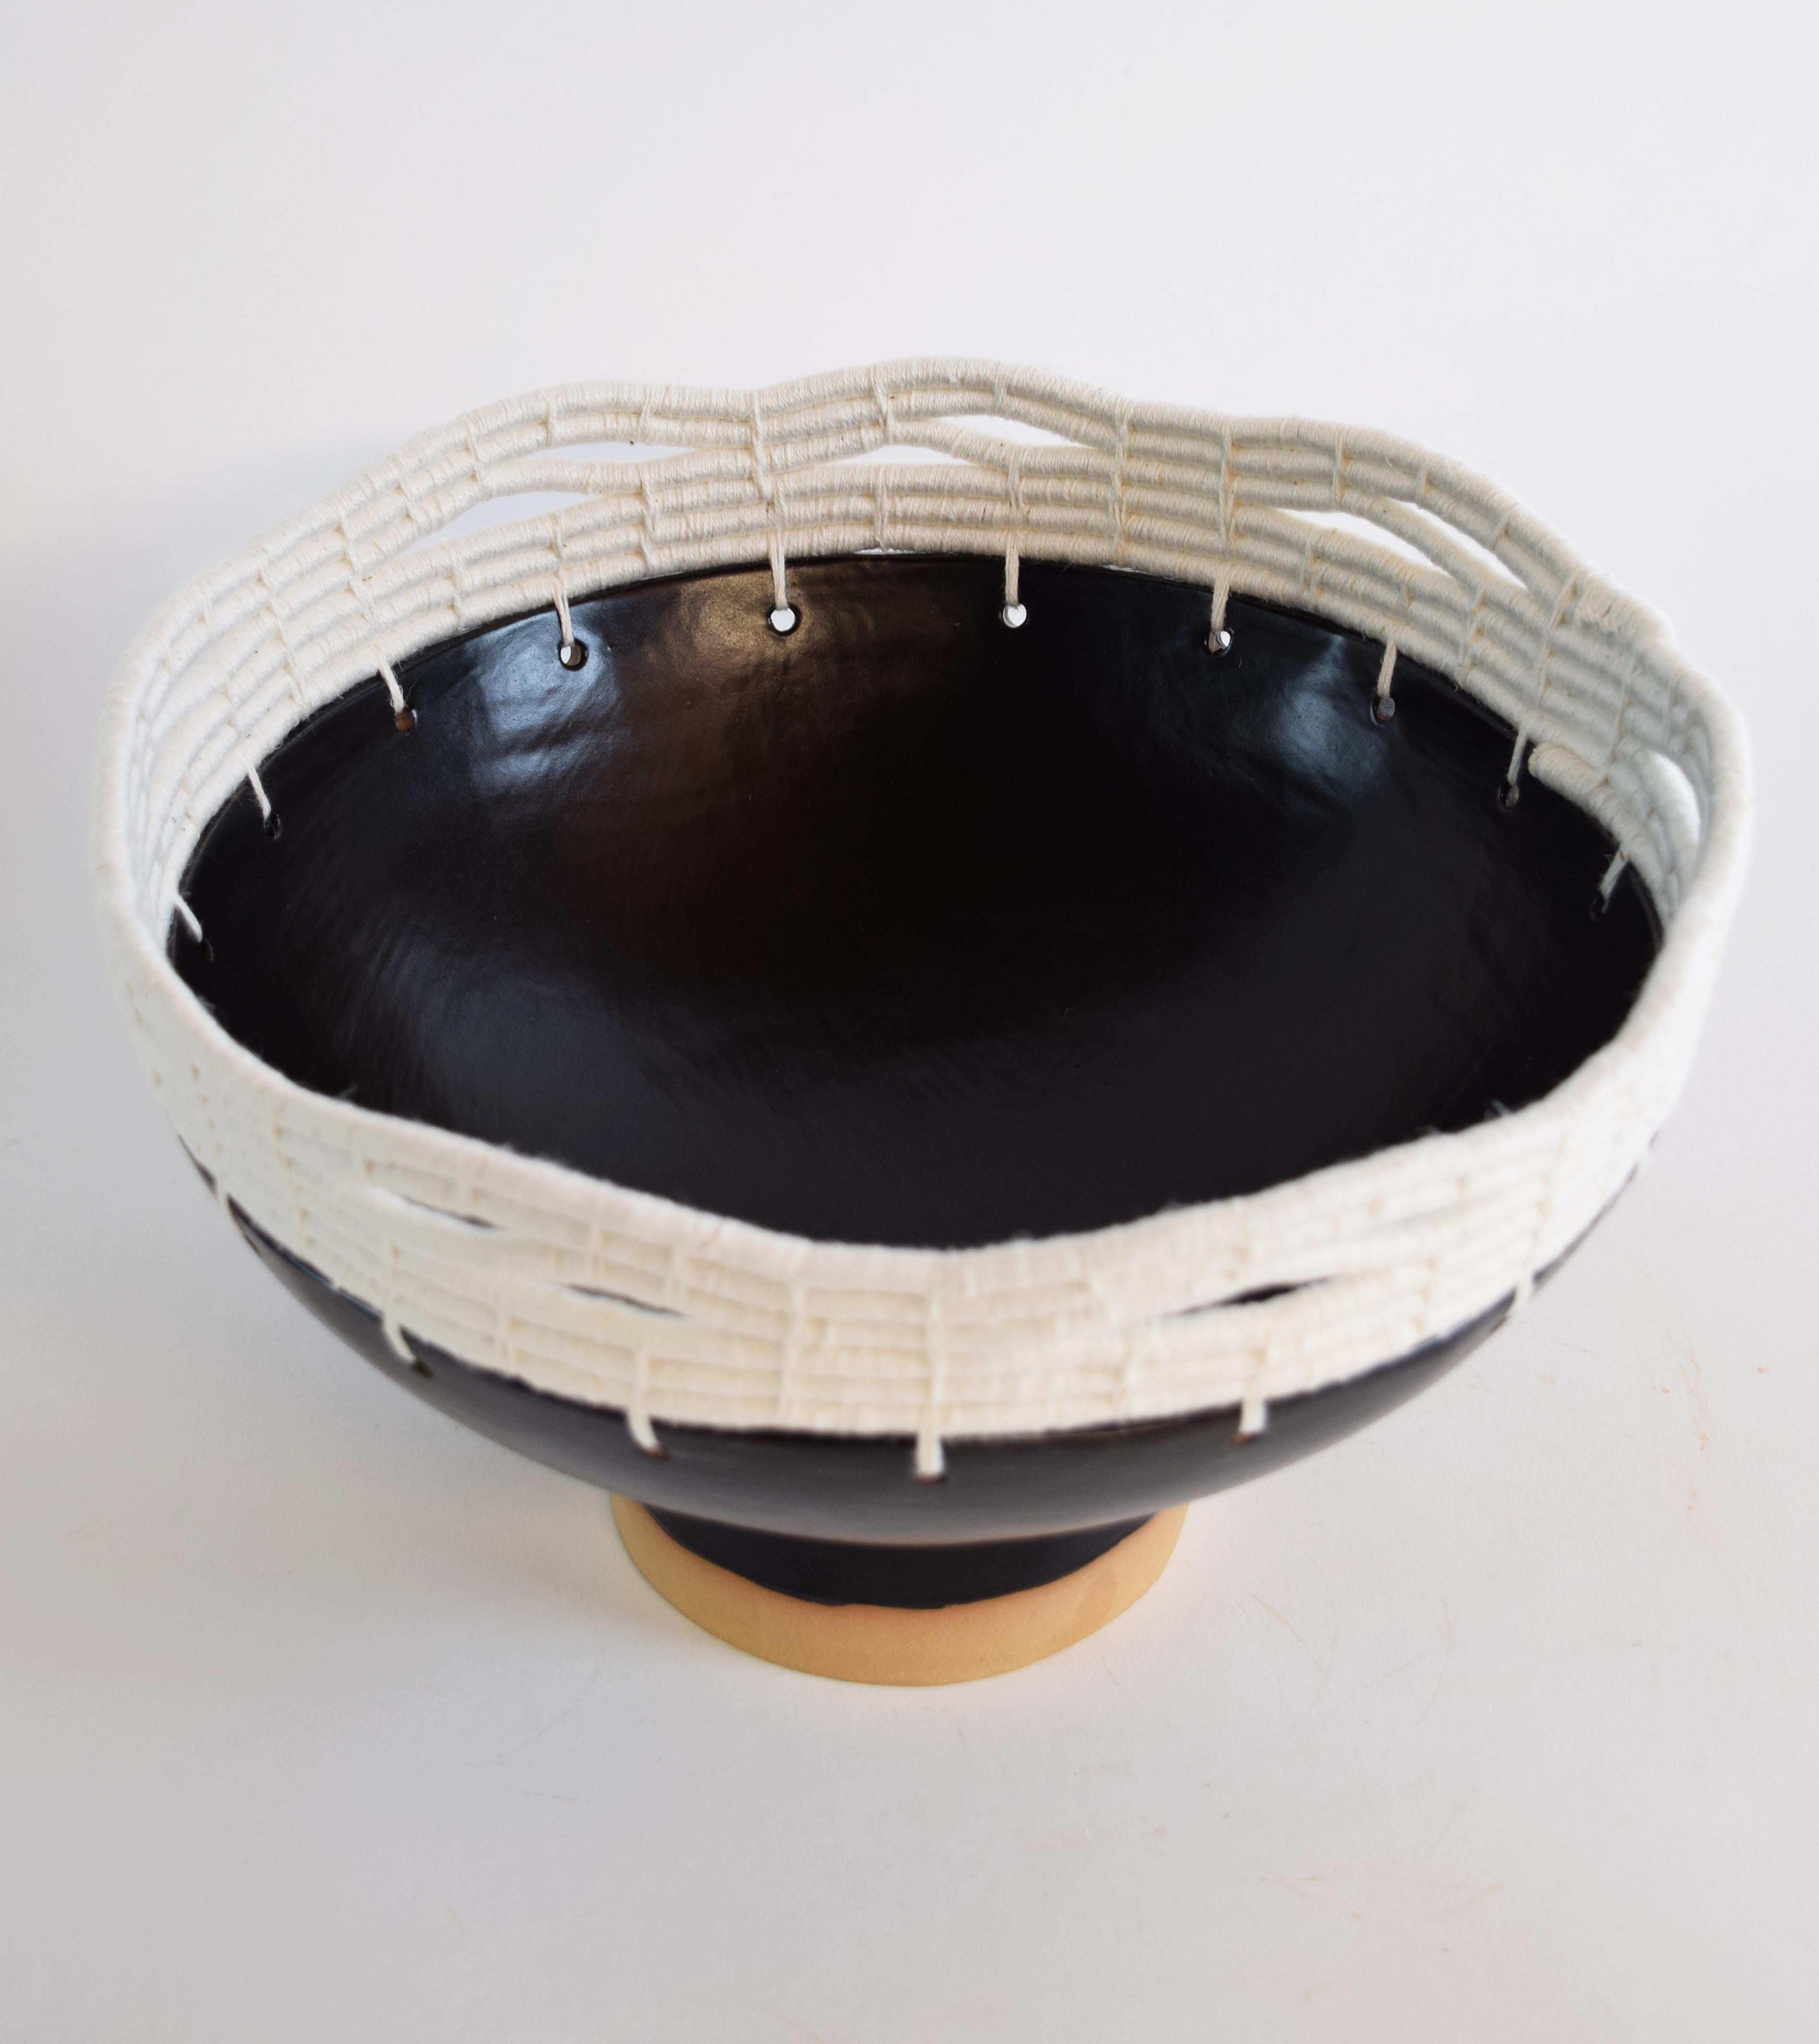 Organic Modern One of a Kind Handmade Ceramic Bowl #804, Satin Black Glaze & Woven White Cotton For Sale